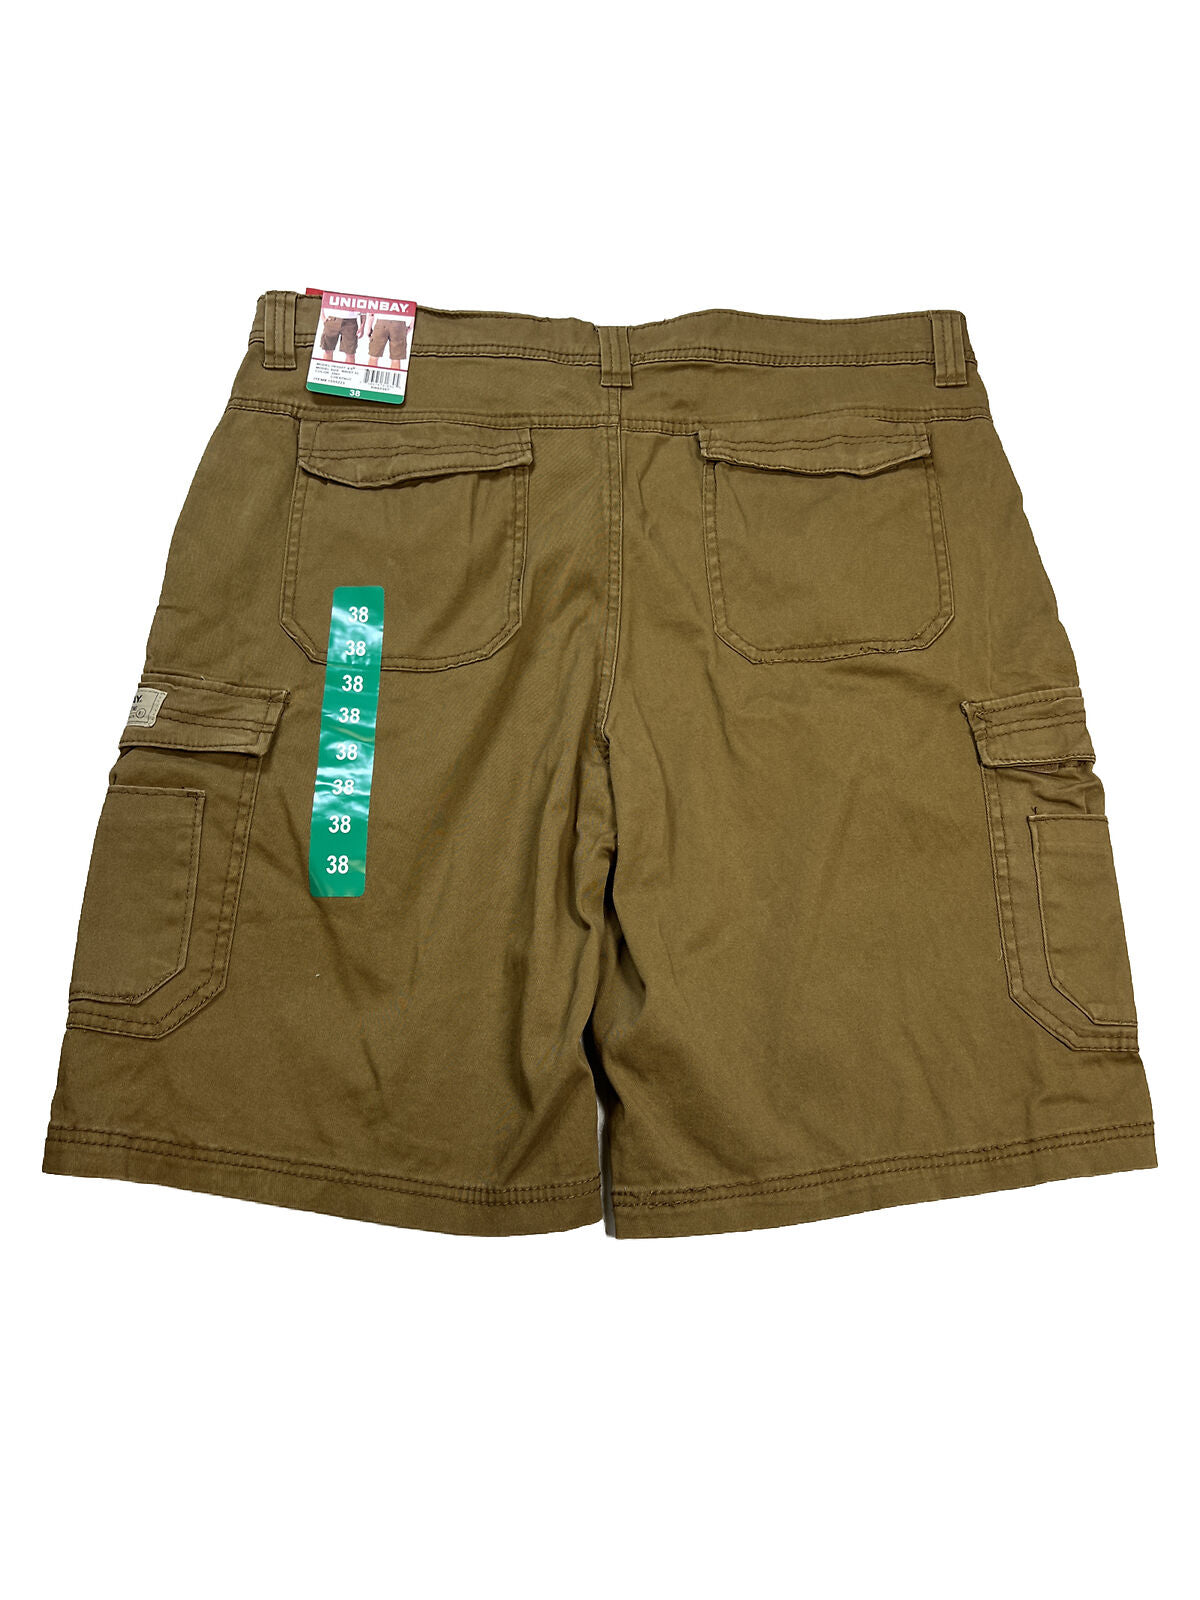 NEW Unionbay Men's Brown Cotton Cargo Shorts - 38